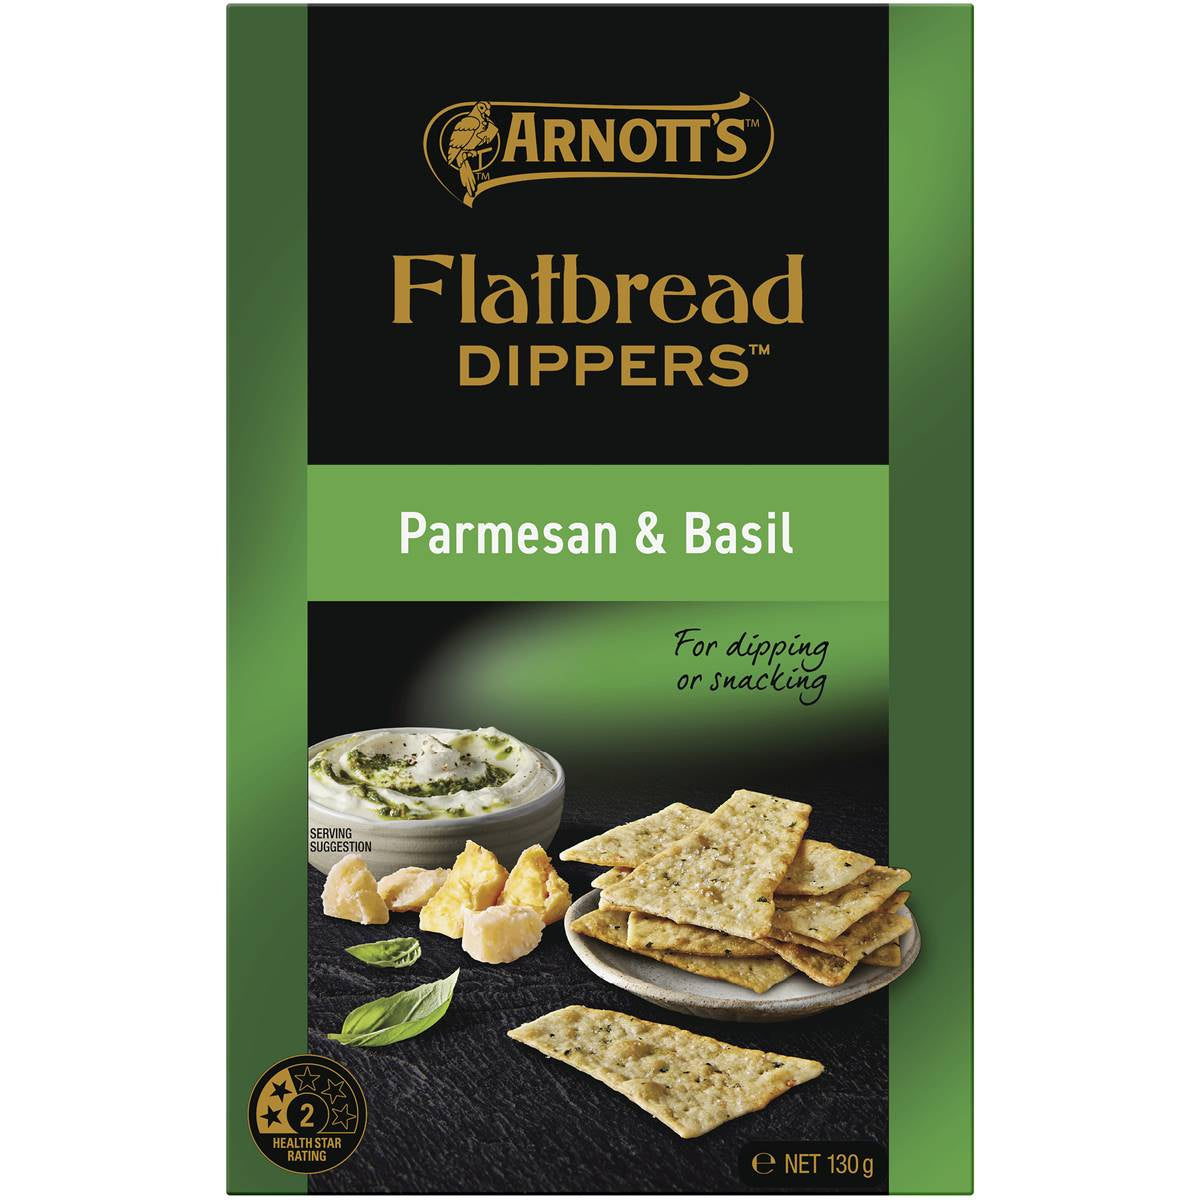 Arnotts Flatbread Dippers Parmesan & Basil Crackers 130g